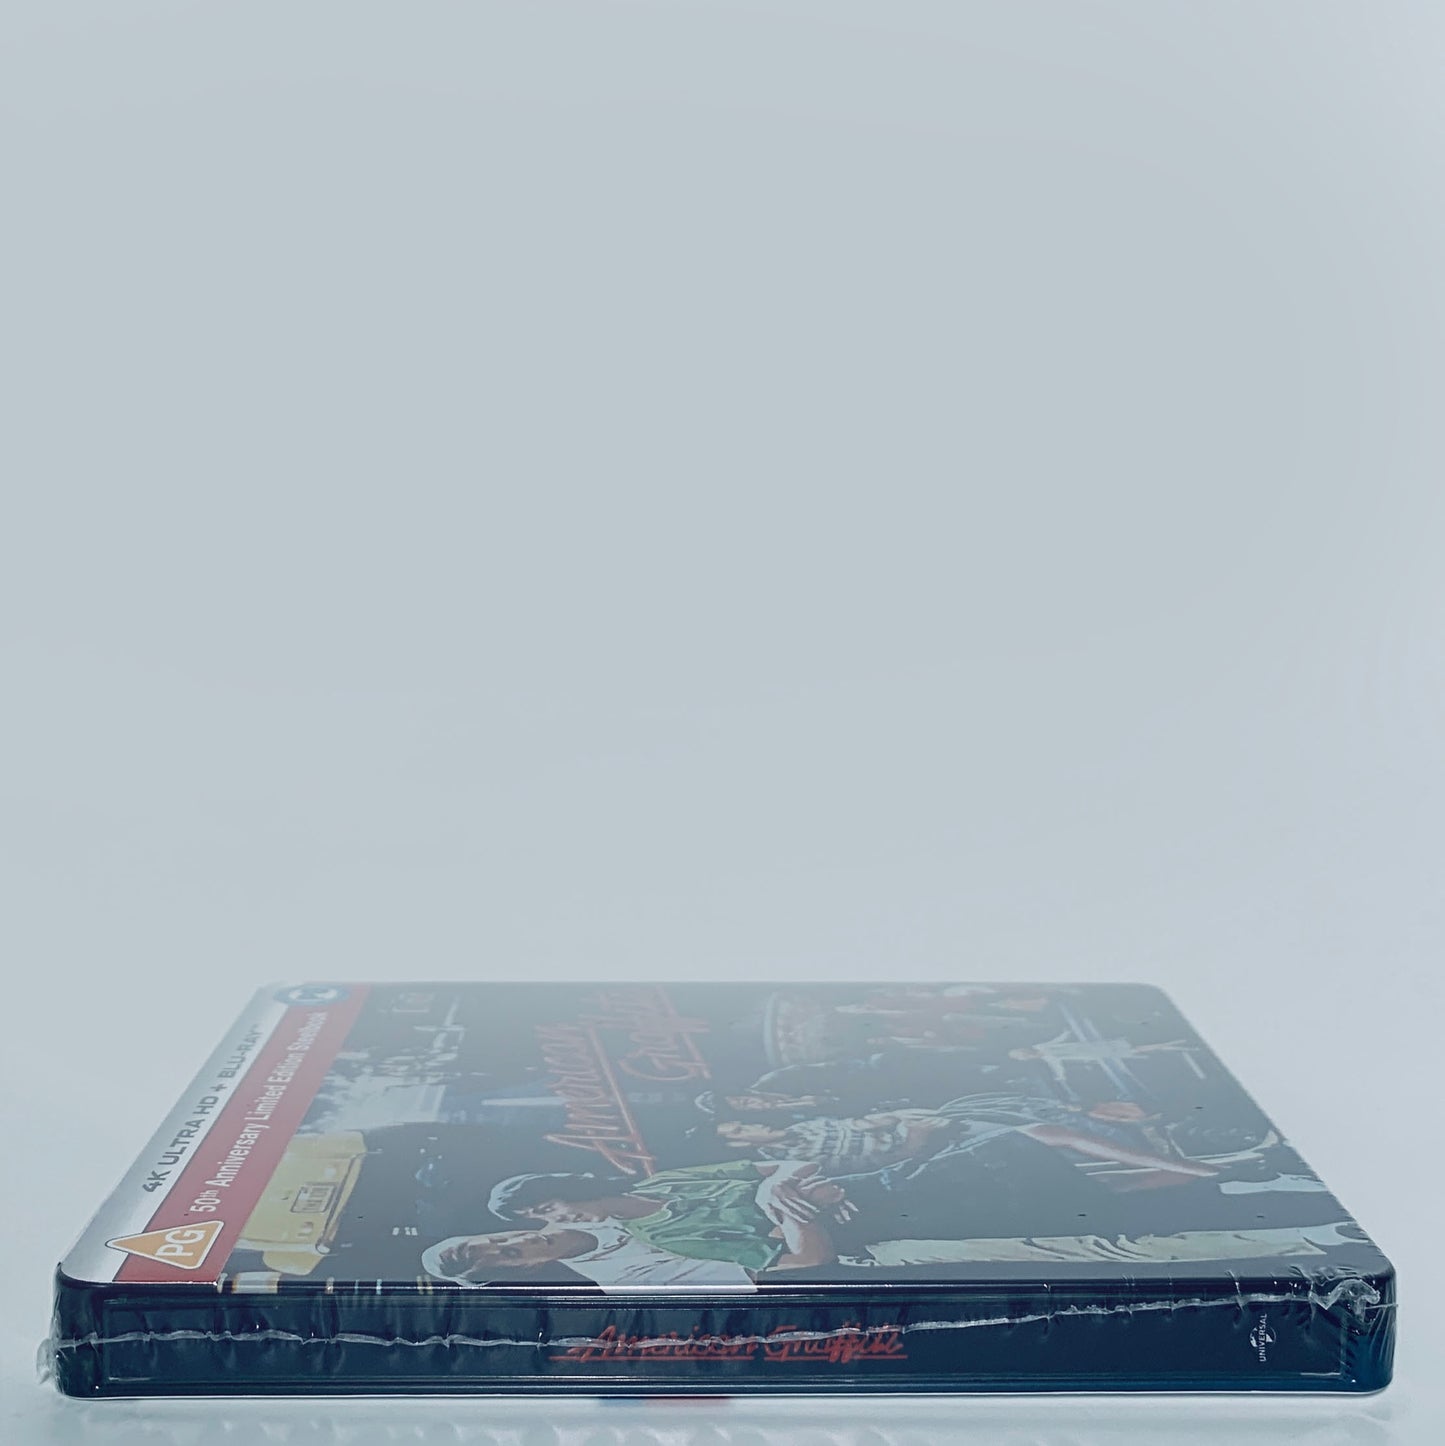 American Graffiti George Lucas 4K Ultra HD Blu-ray Steel Book Universal